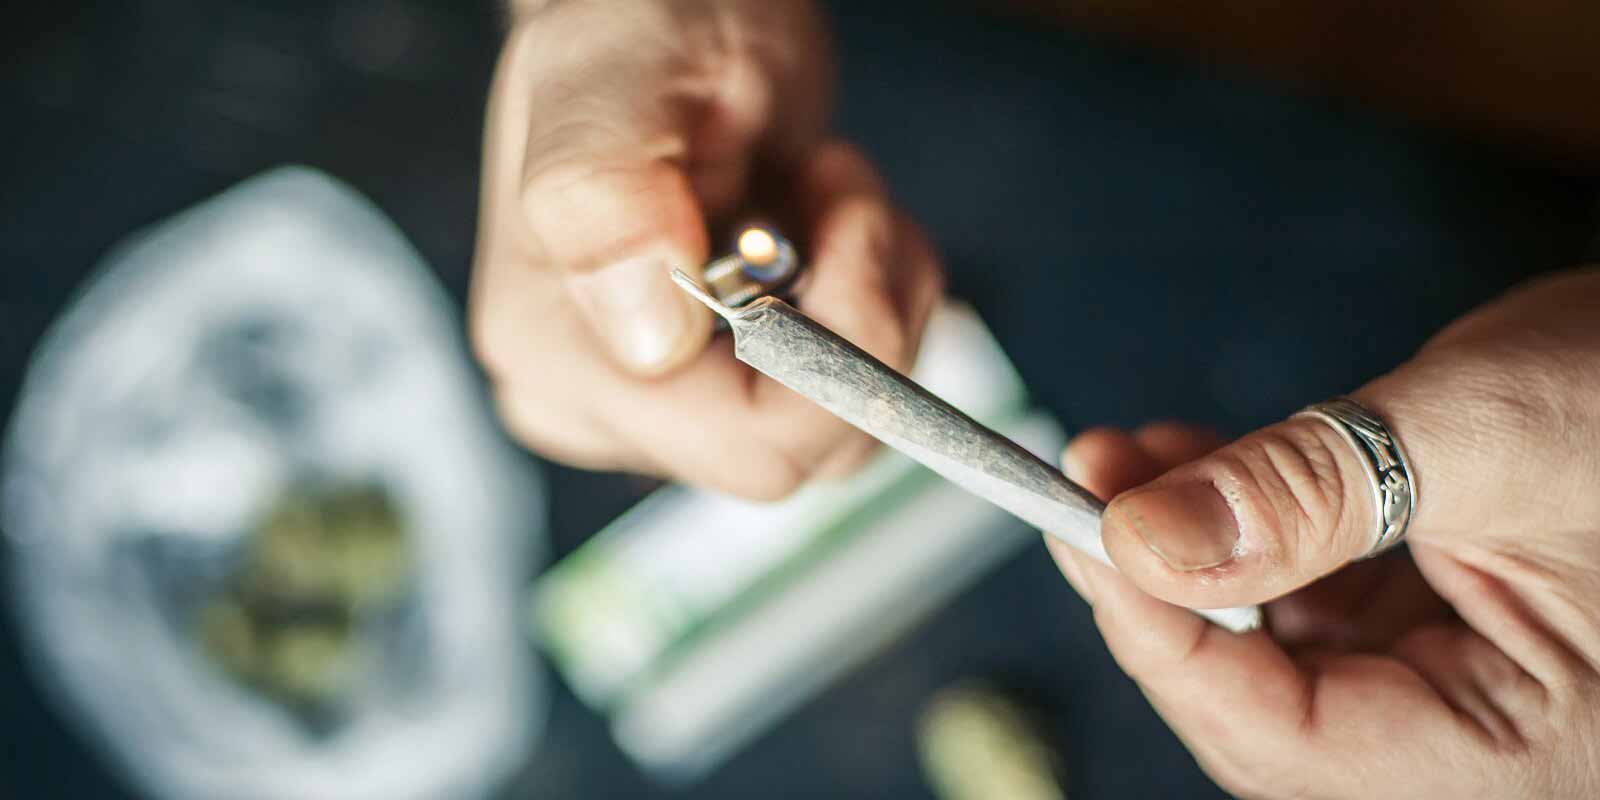 lighting up marijuana joint with lighter